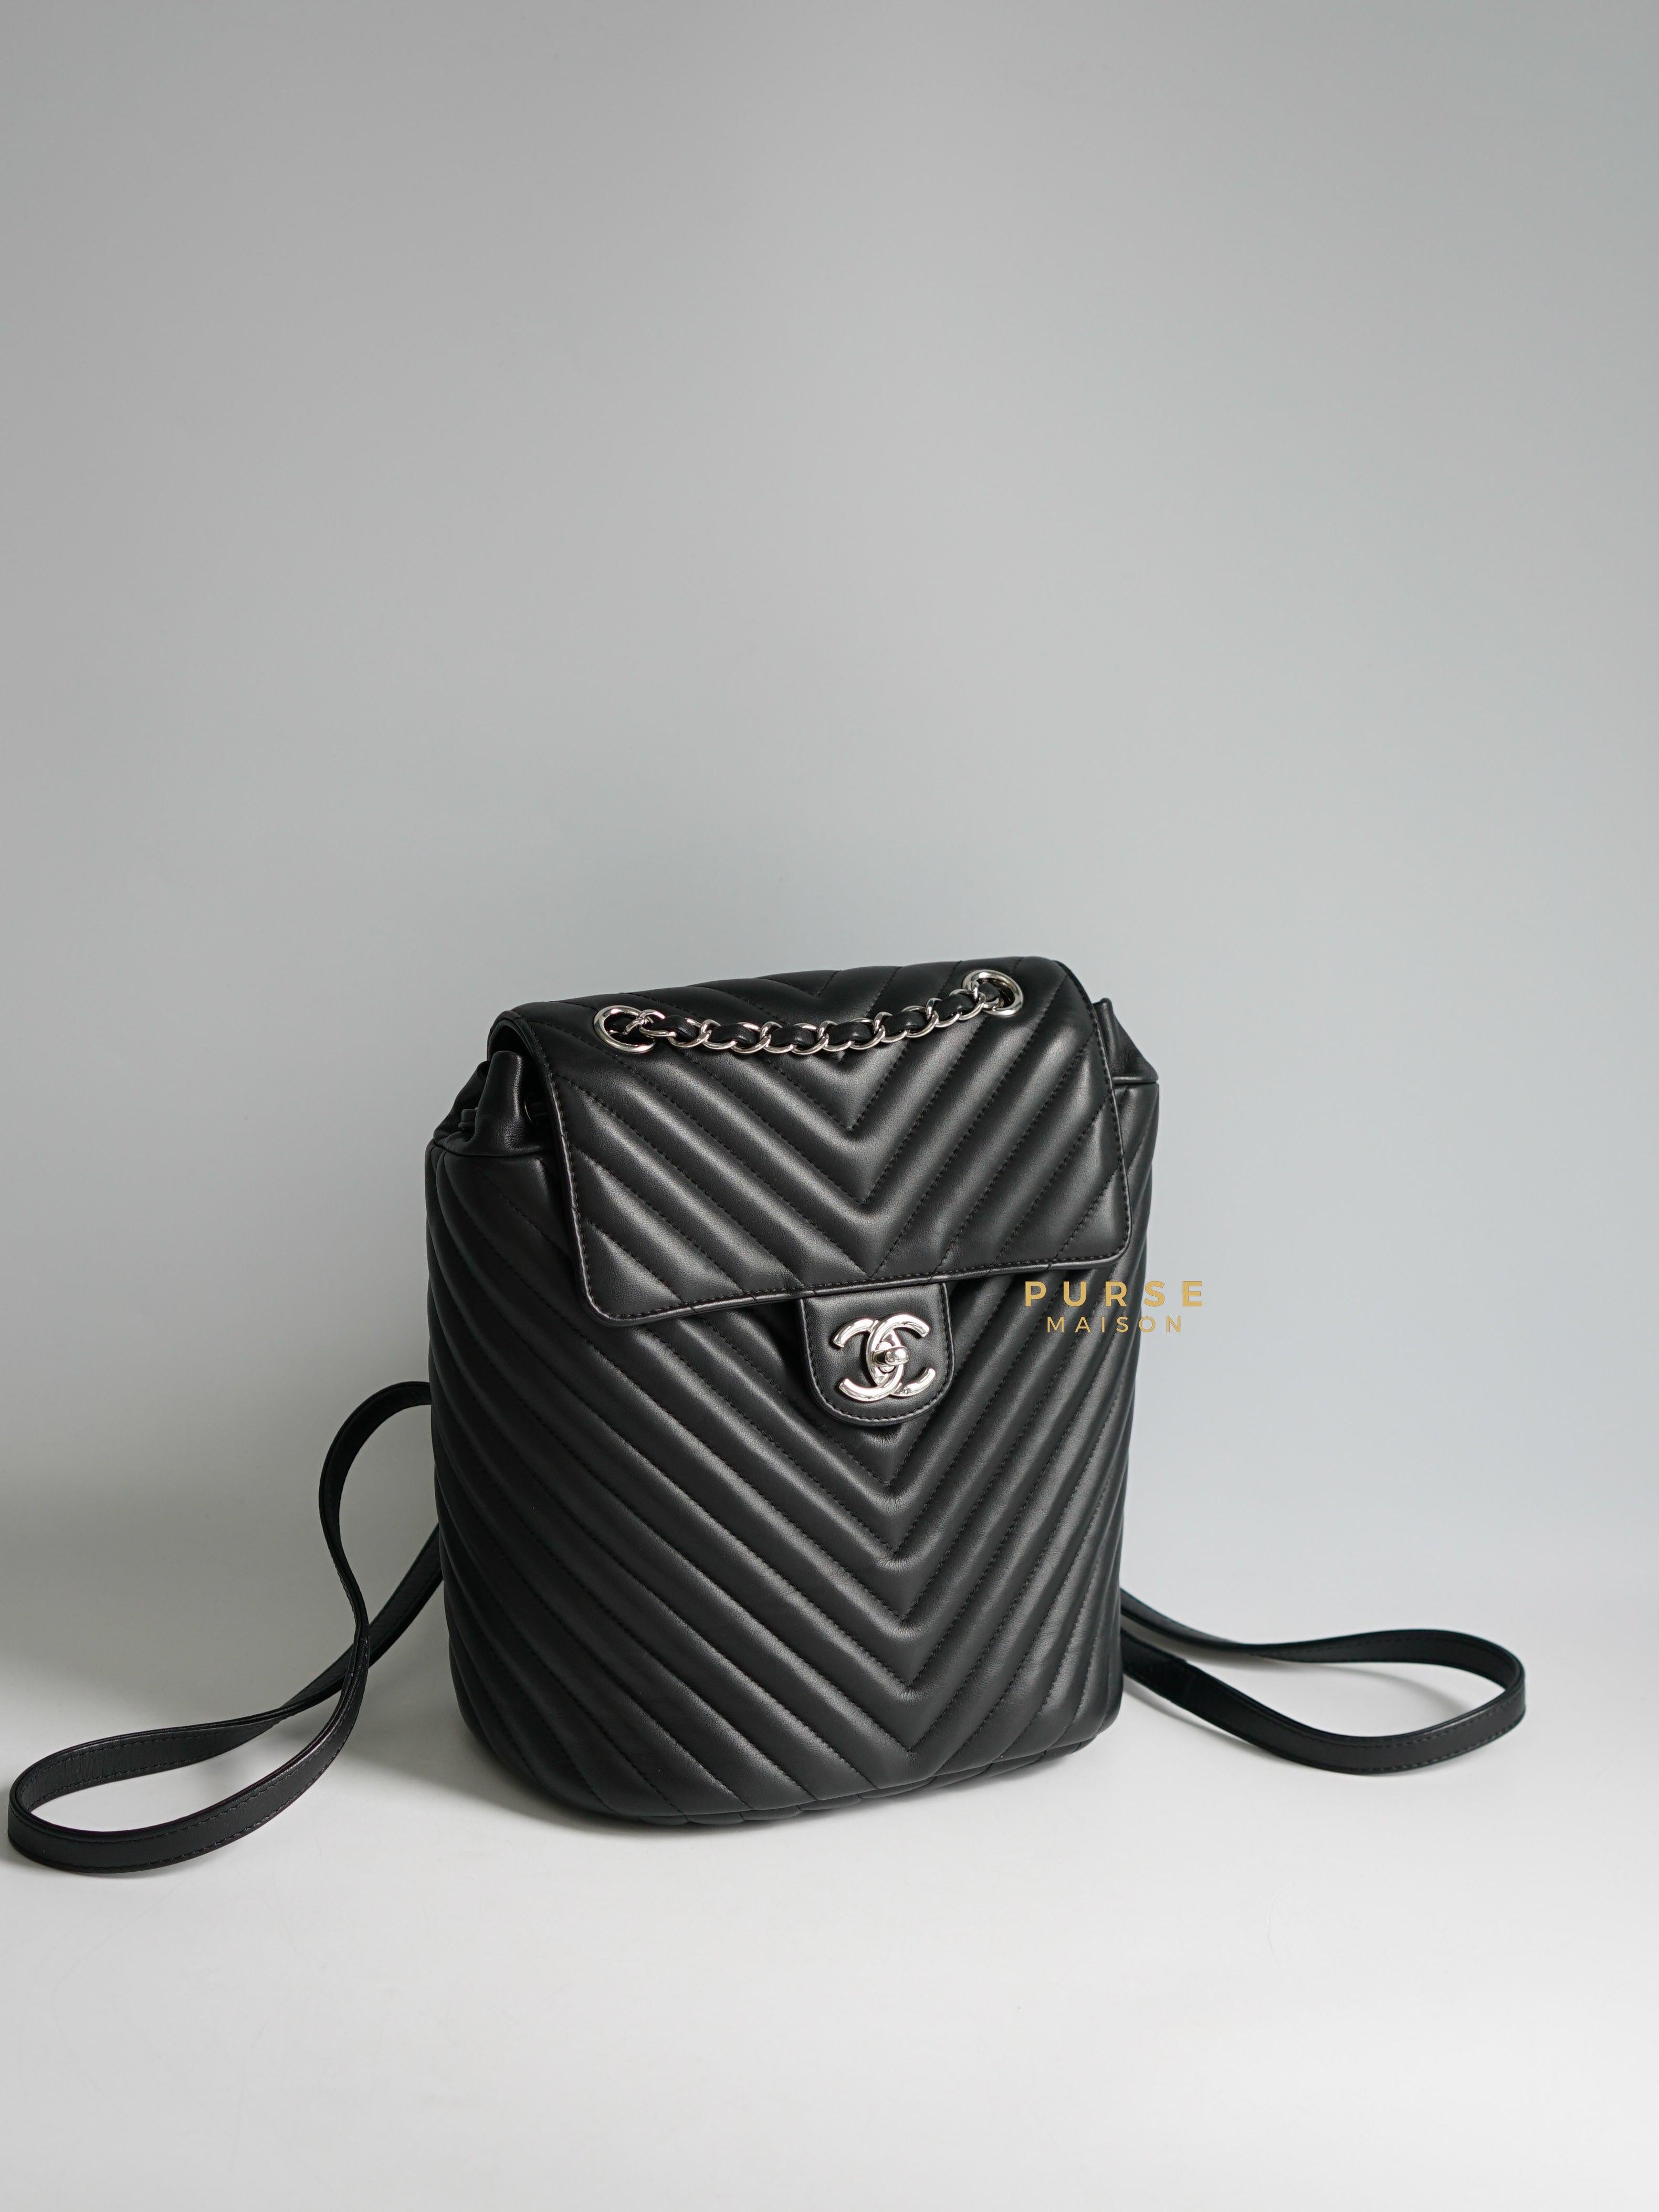 Chanel Chevron Urban Spirit Backpack Series 22 in Silver Hardware & Calfskin | Purse Maison Luxury Bags Shop